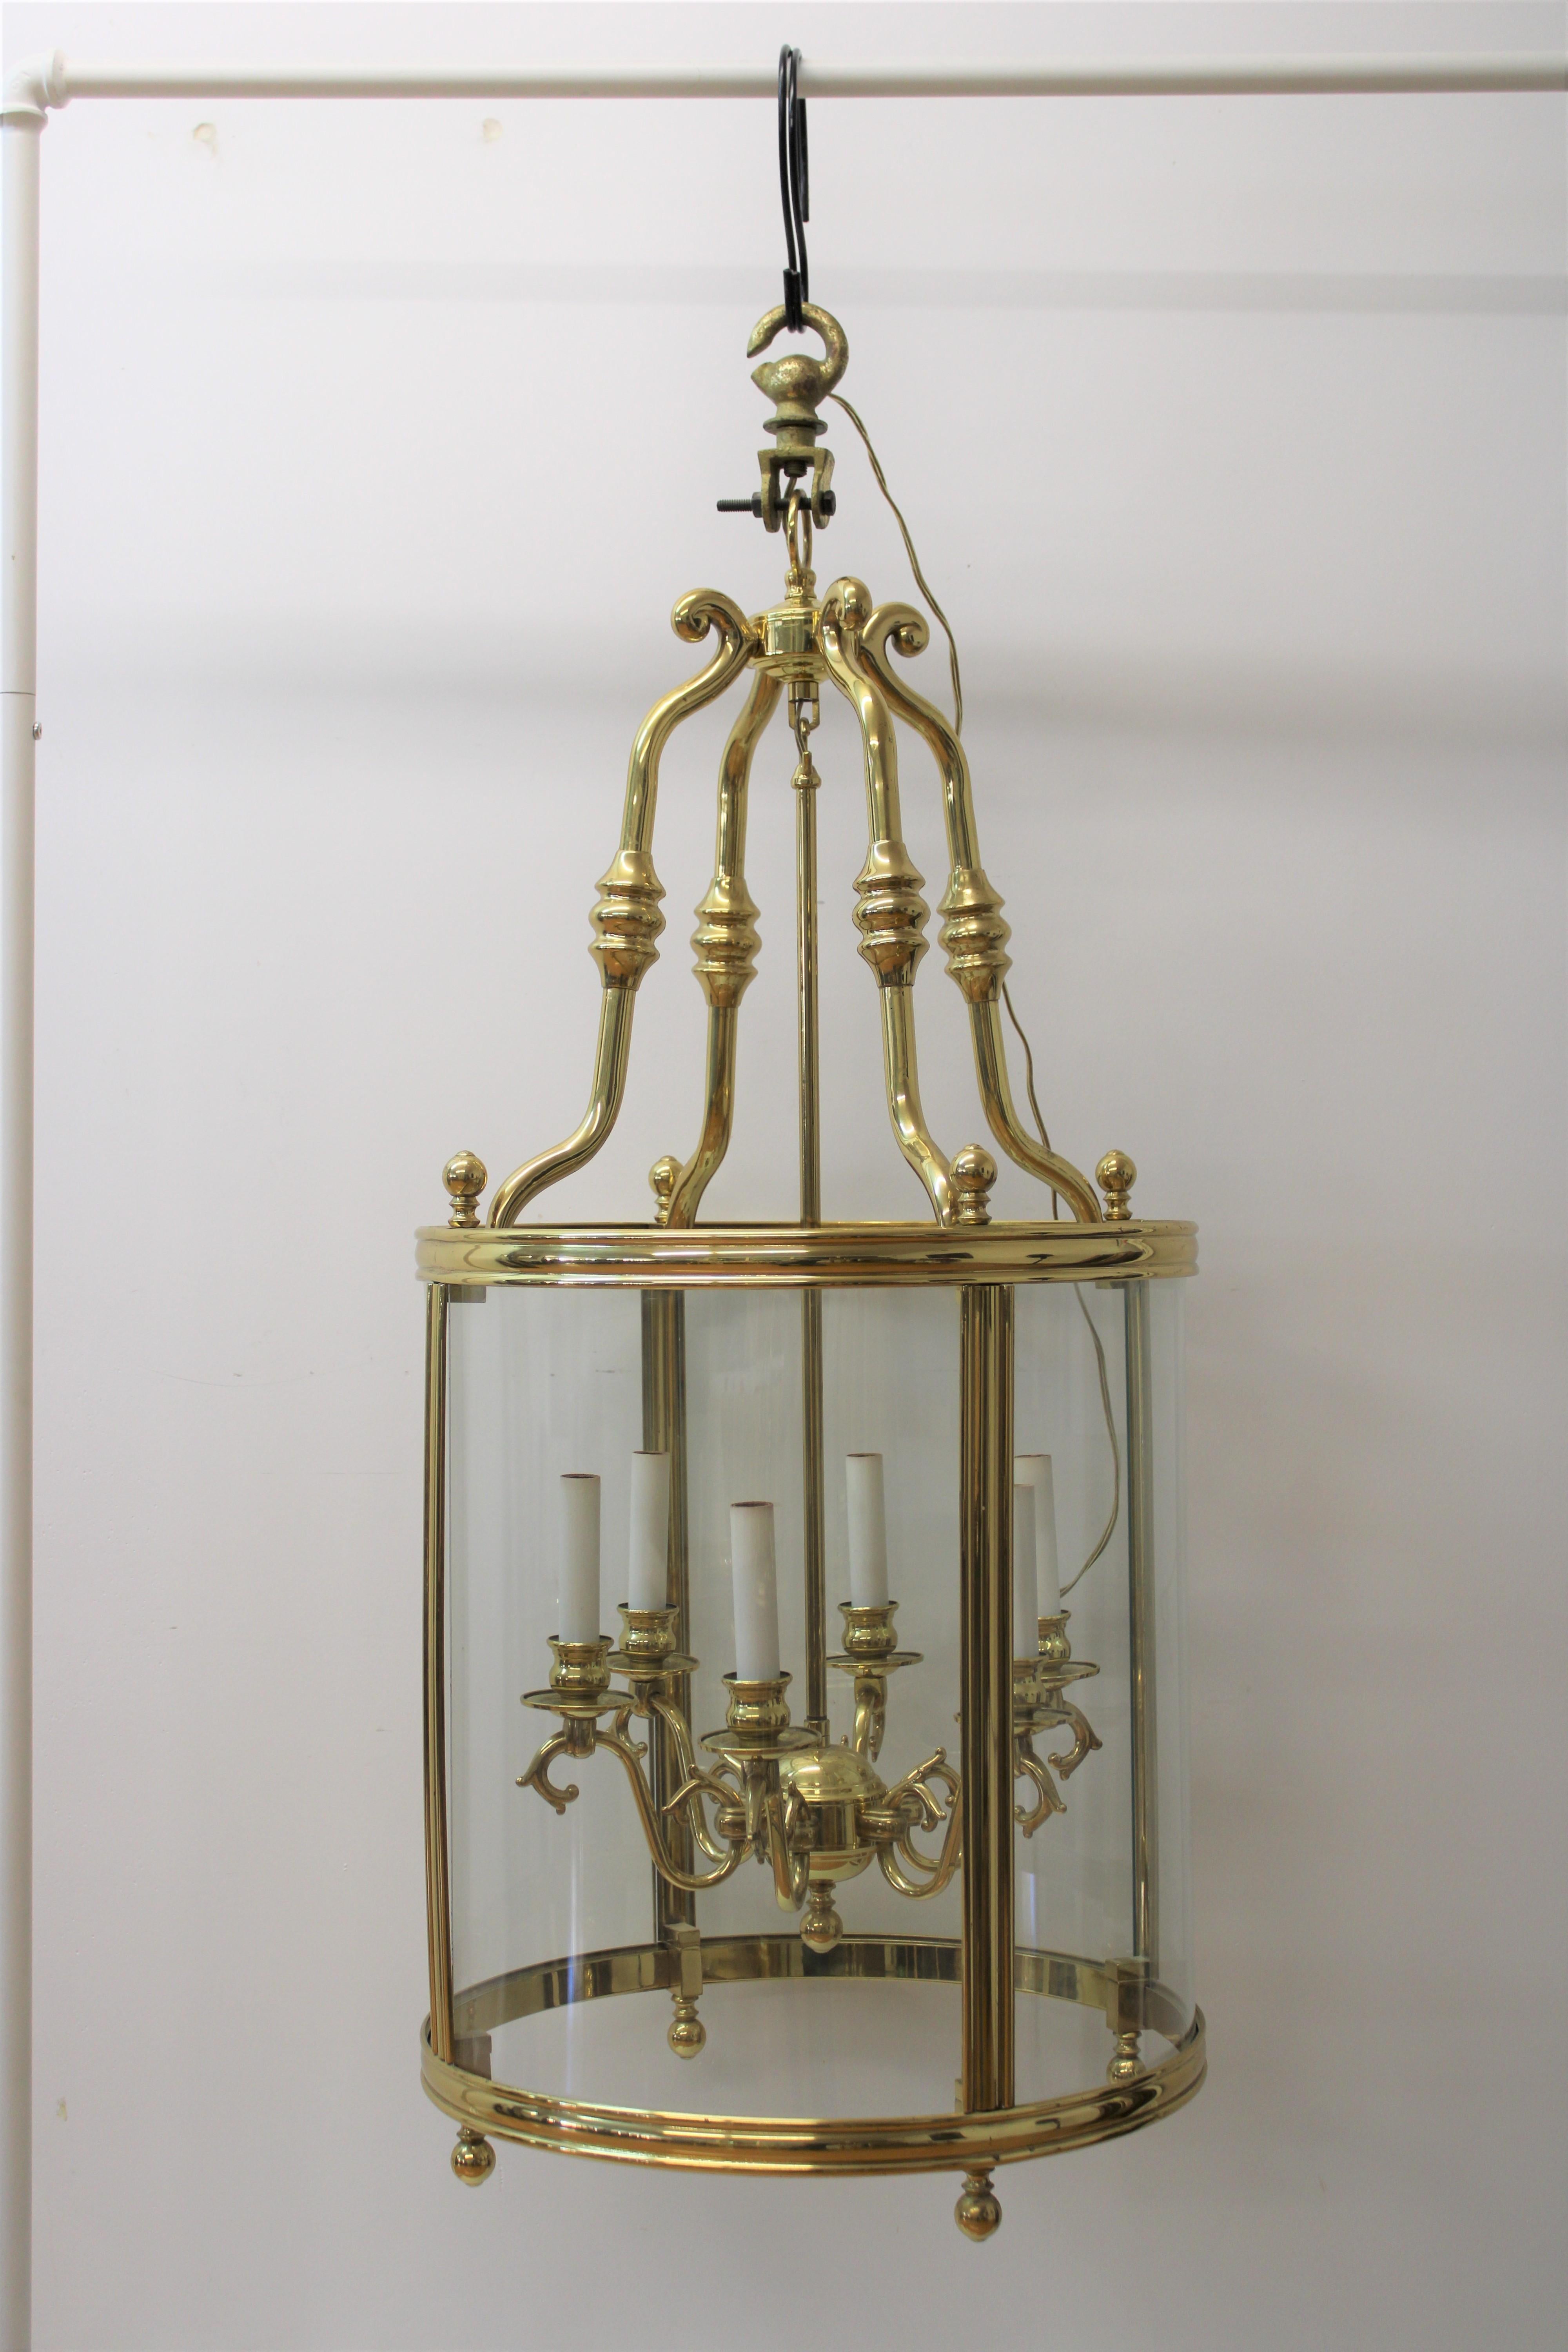 C. 20trh Century

Pair of English style brass & glass hanging lanterns, each lantern has 6 candle lights.